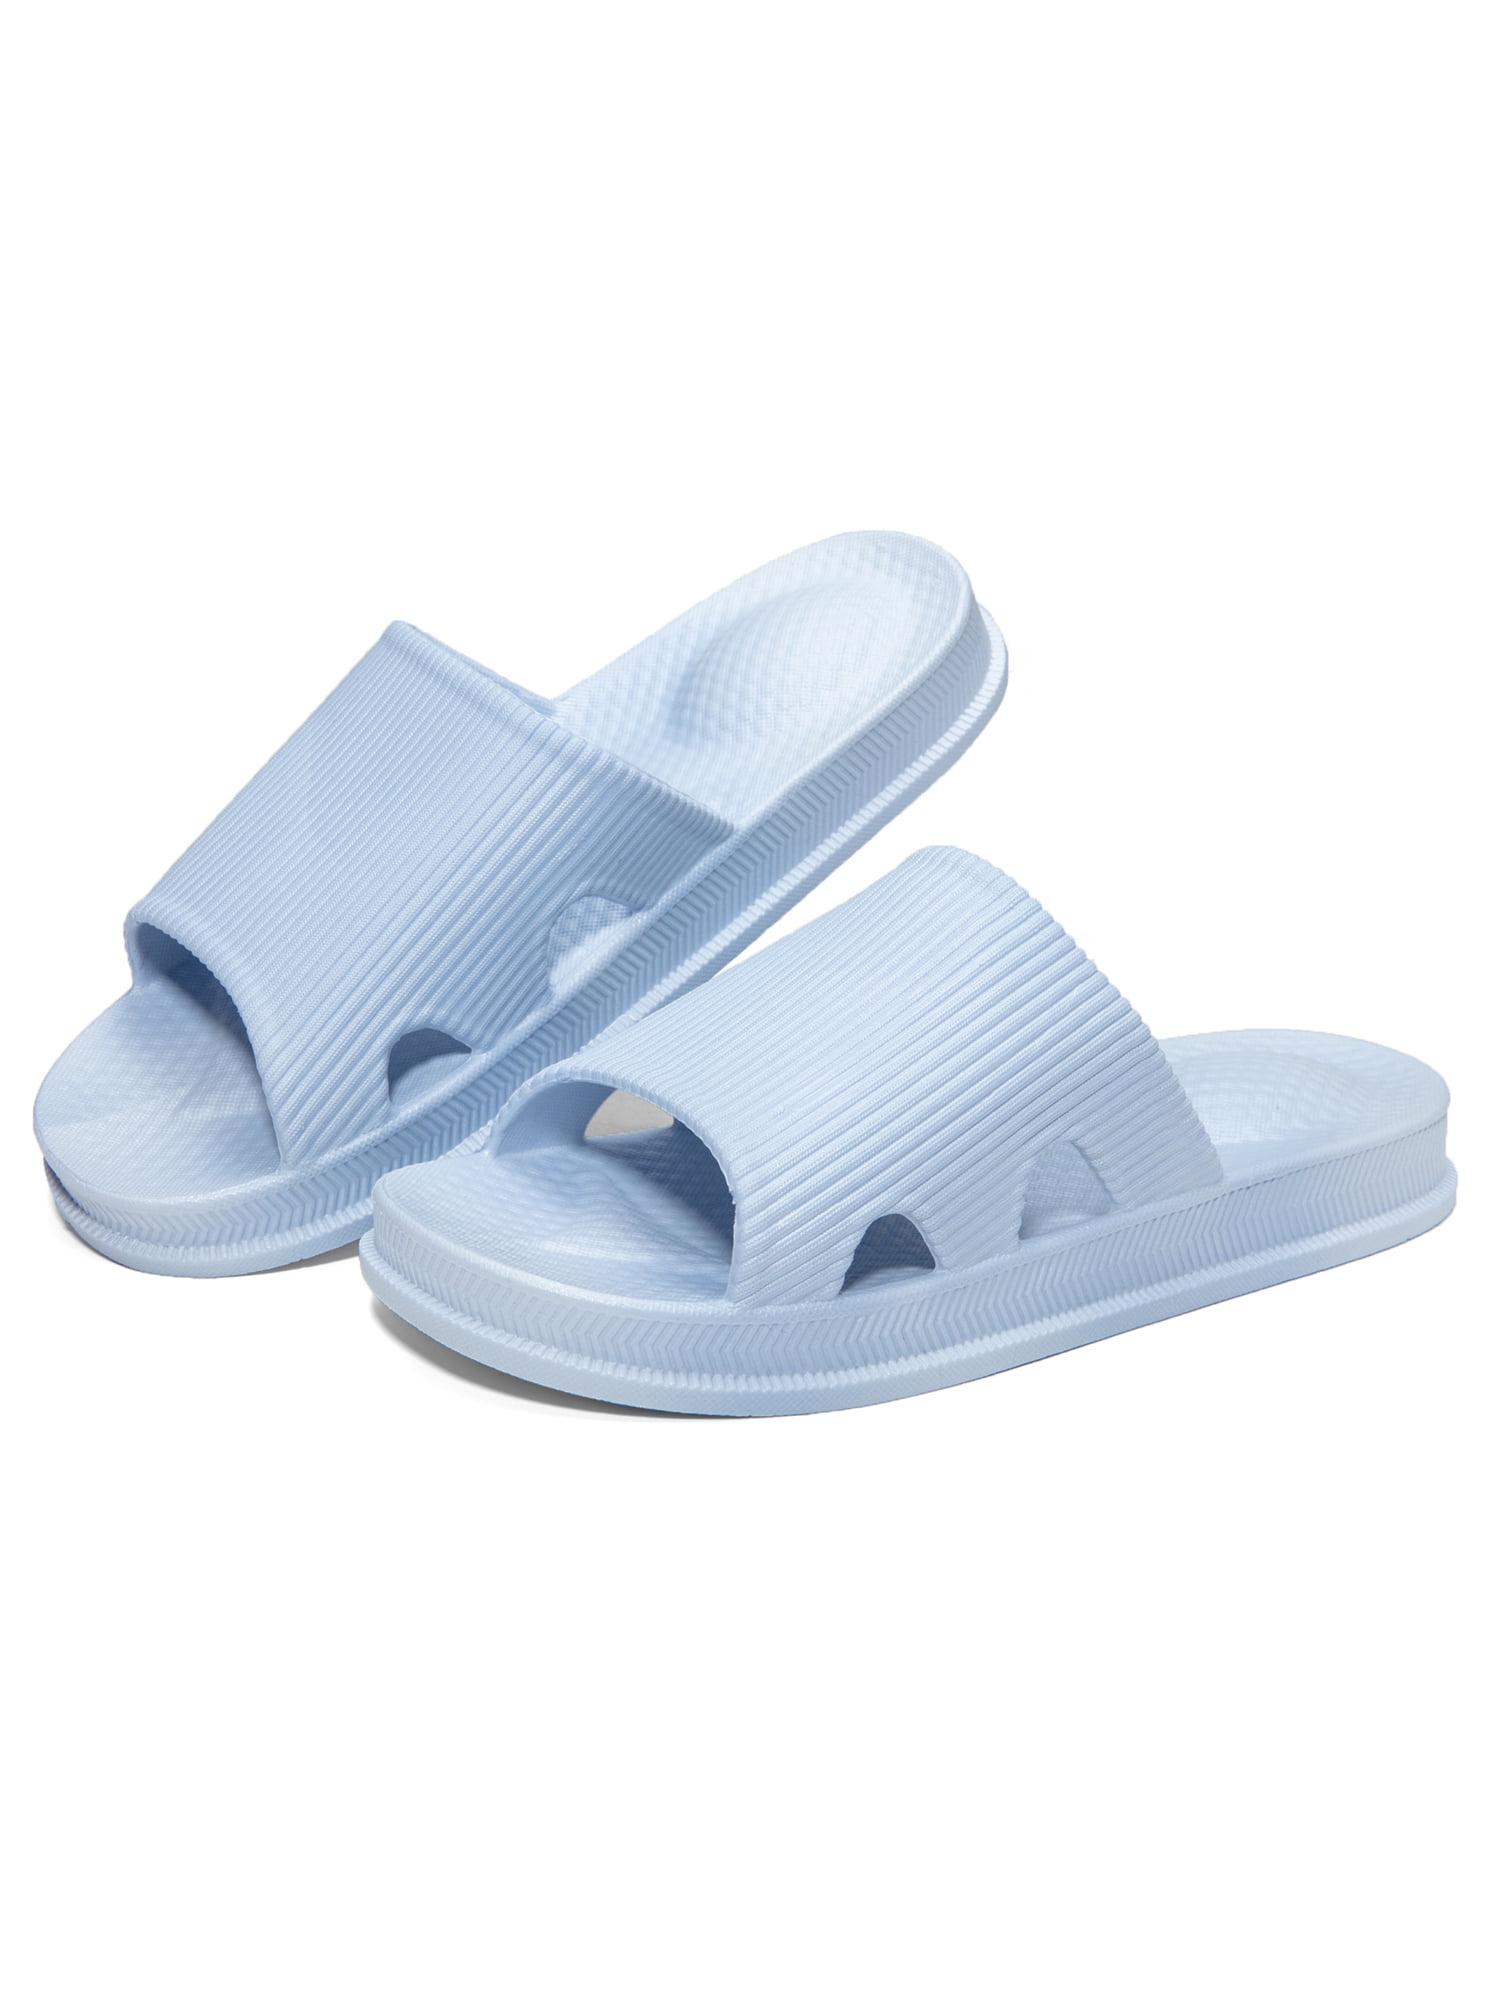 Women Bath Shower Slippers Non-slip Flip Flops Sandals Slide Platform Pool Shoes 